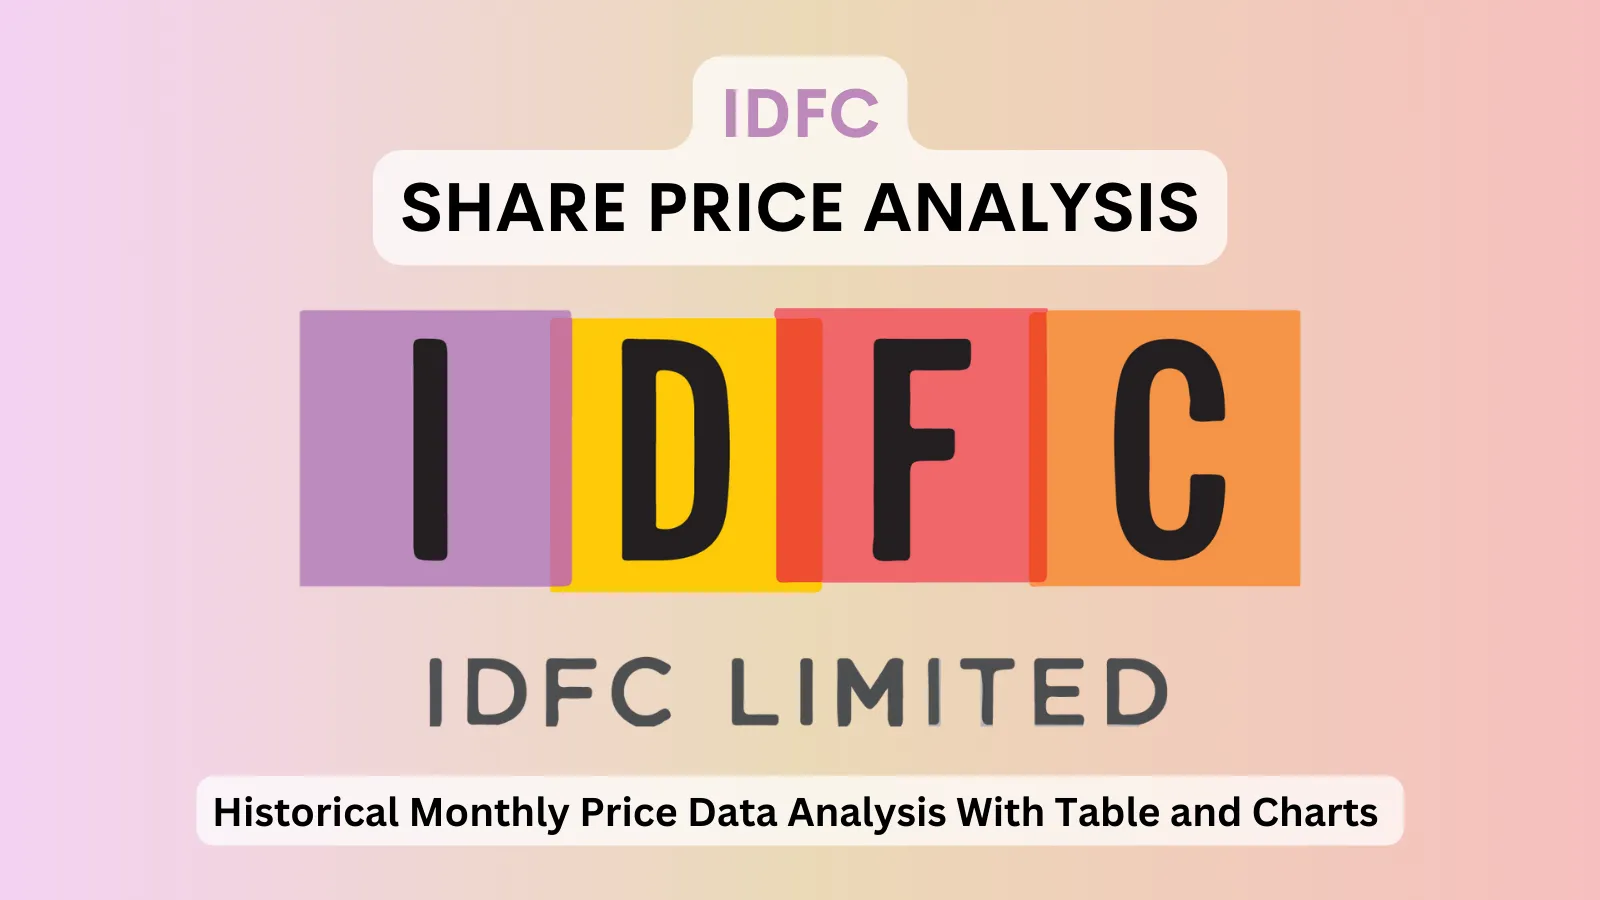 IDFC share price analysis